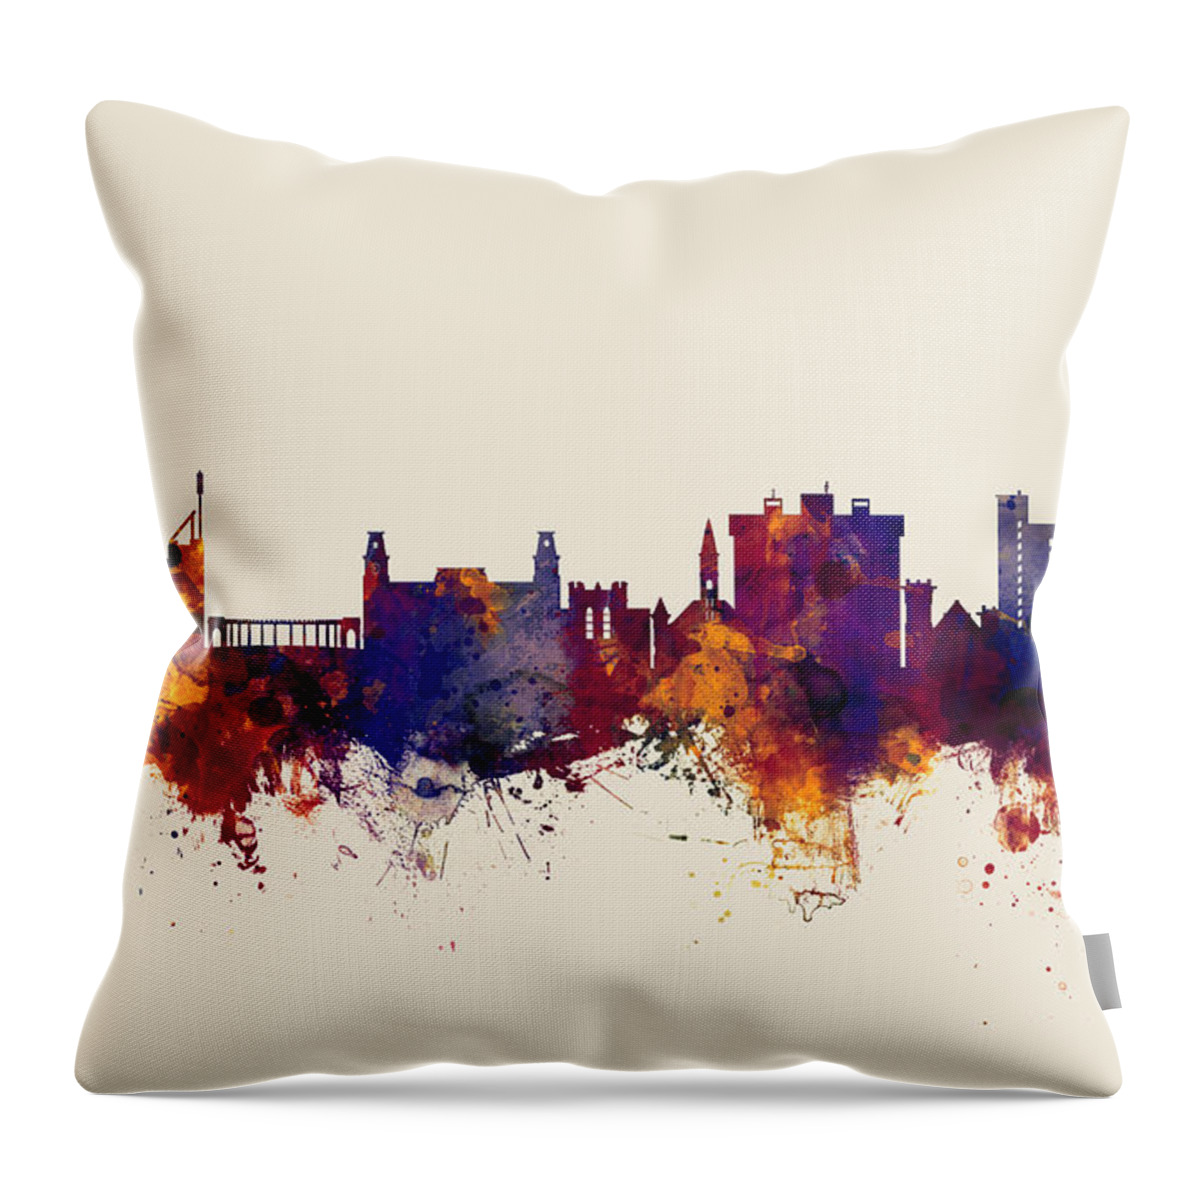 Fayetteville Throw Pillow featuring the digital art Fayetteville Arkansas Skyline by Michael Tompsett